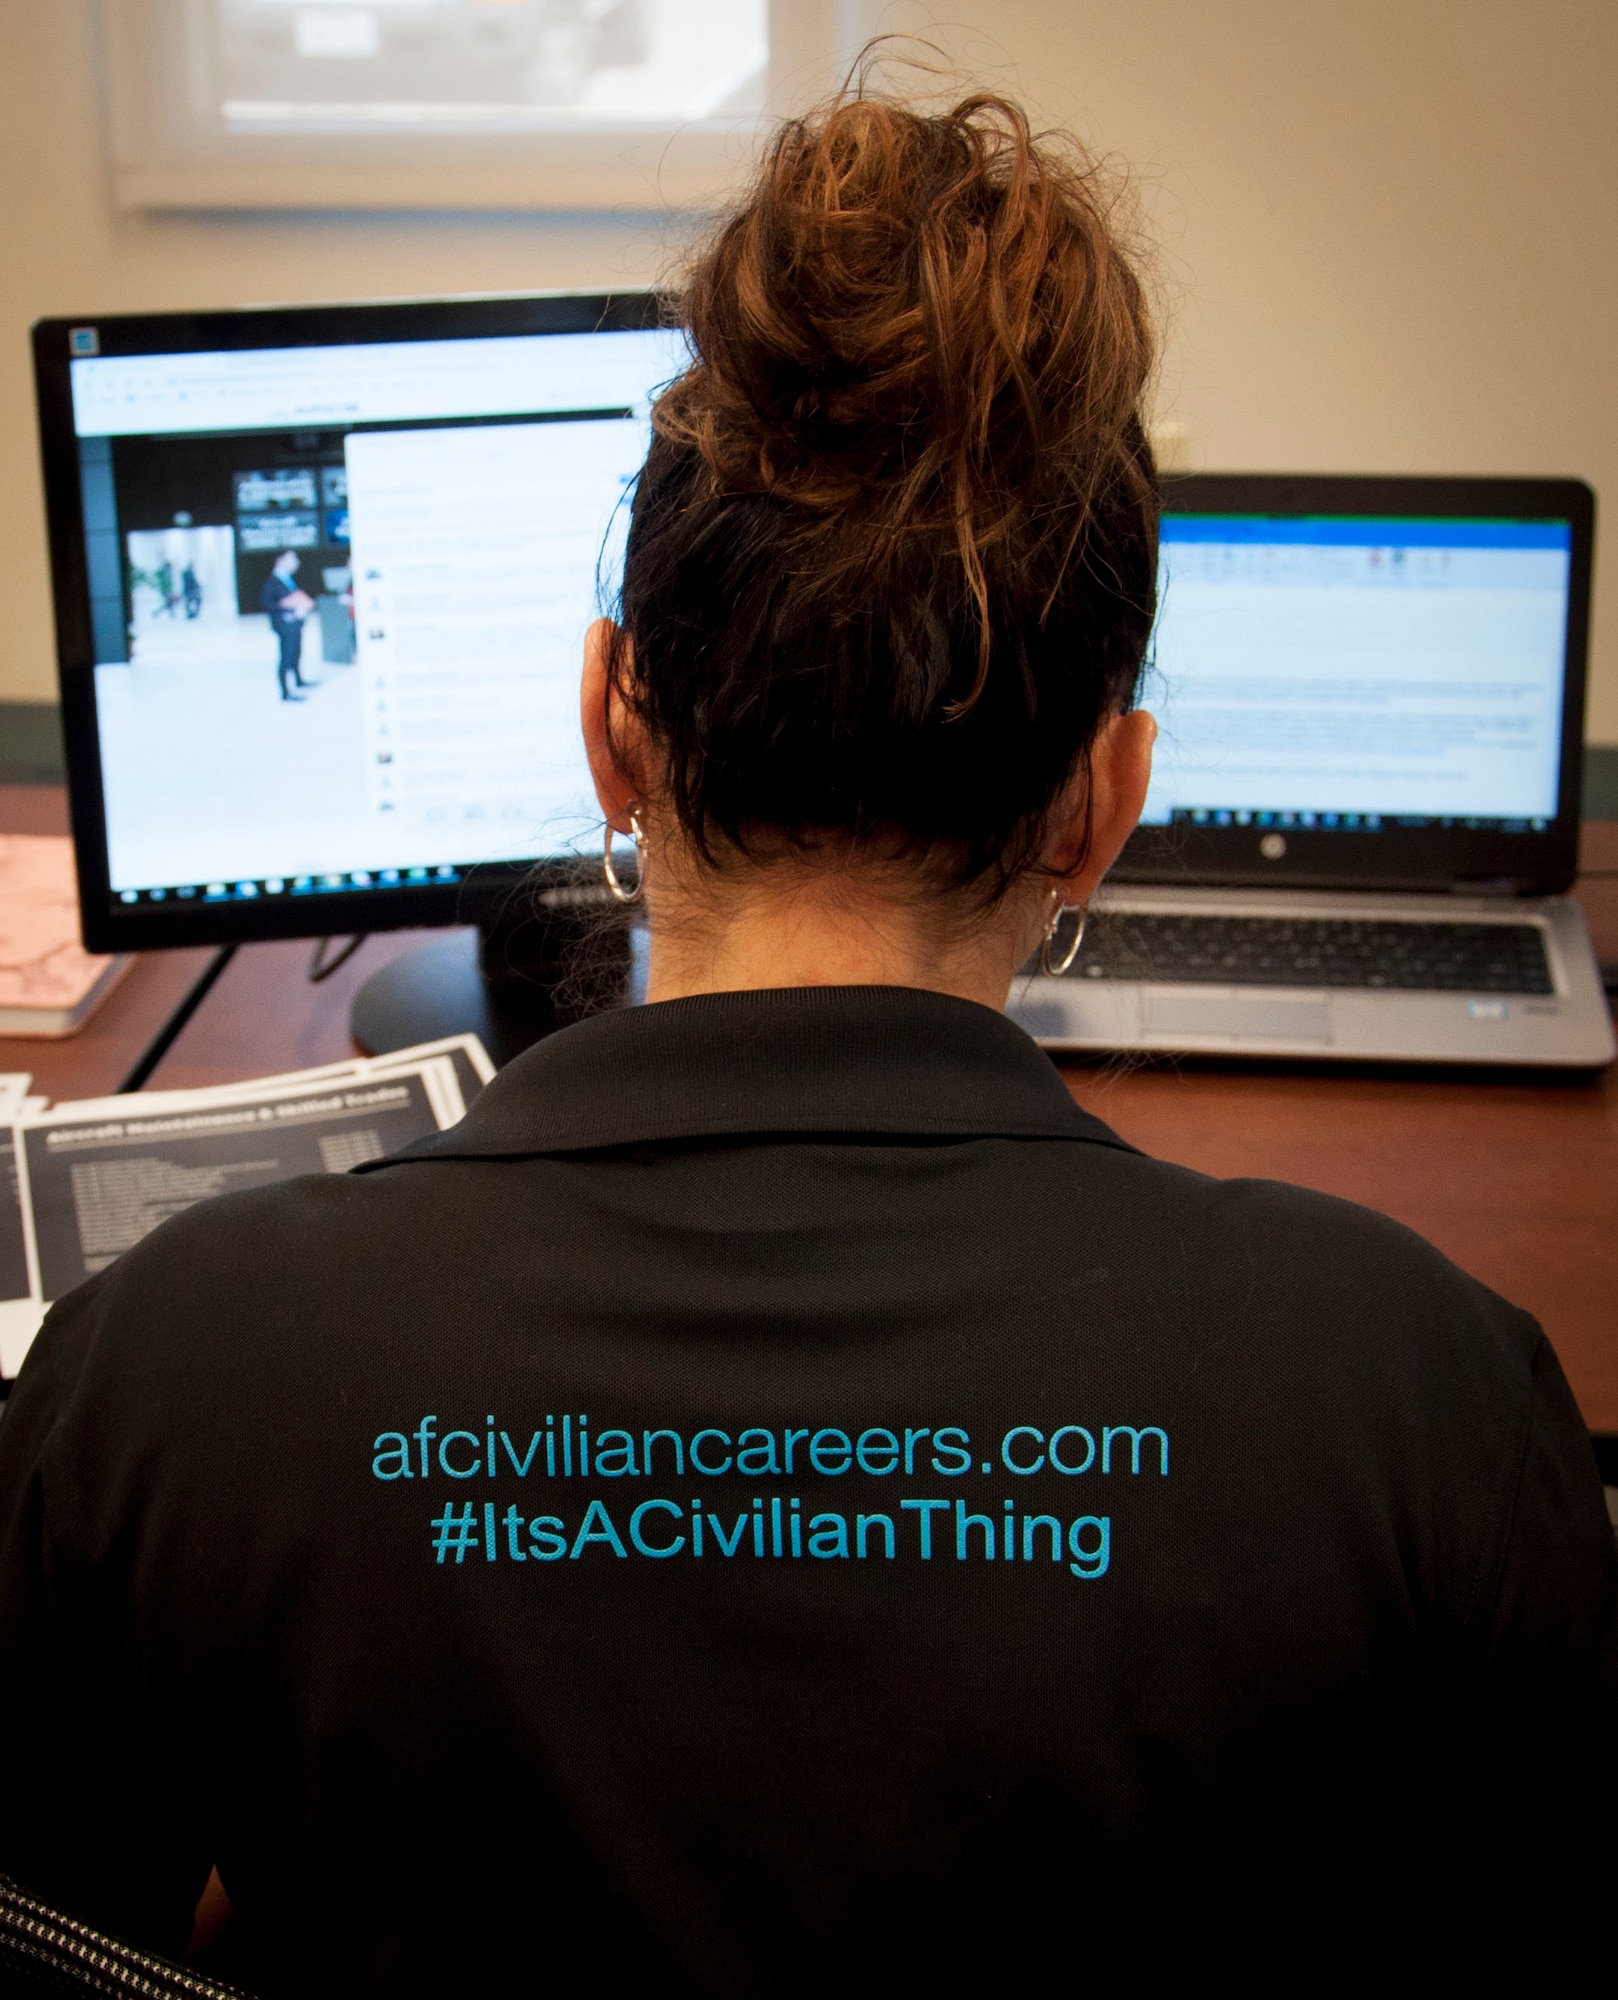 AFCS seeks talent through virtual hiring events